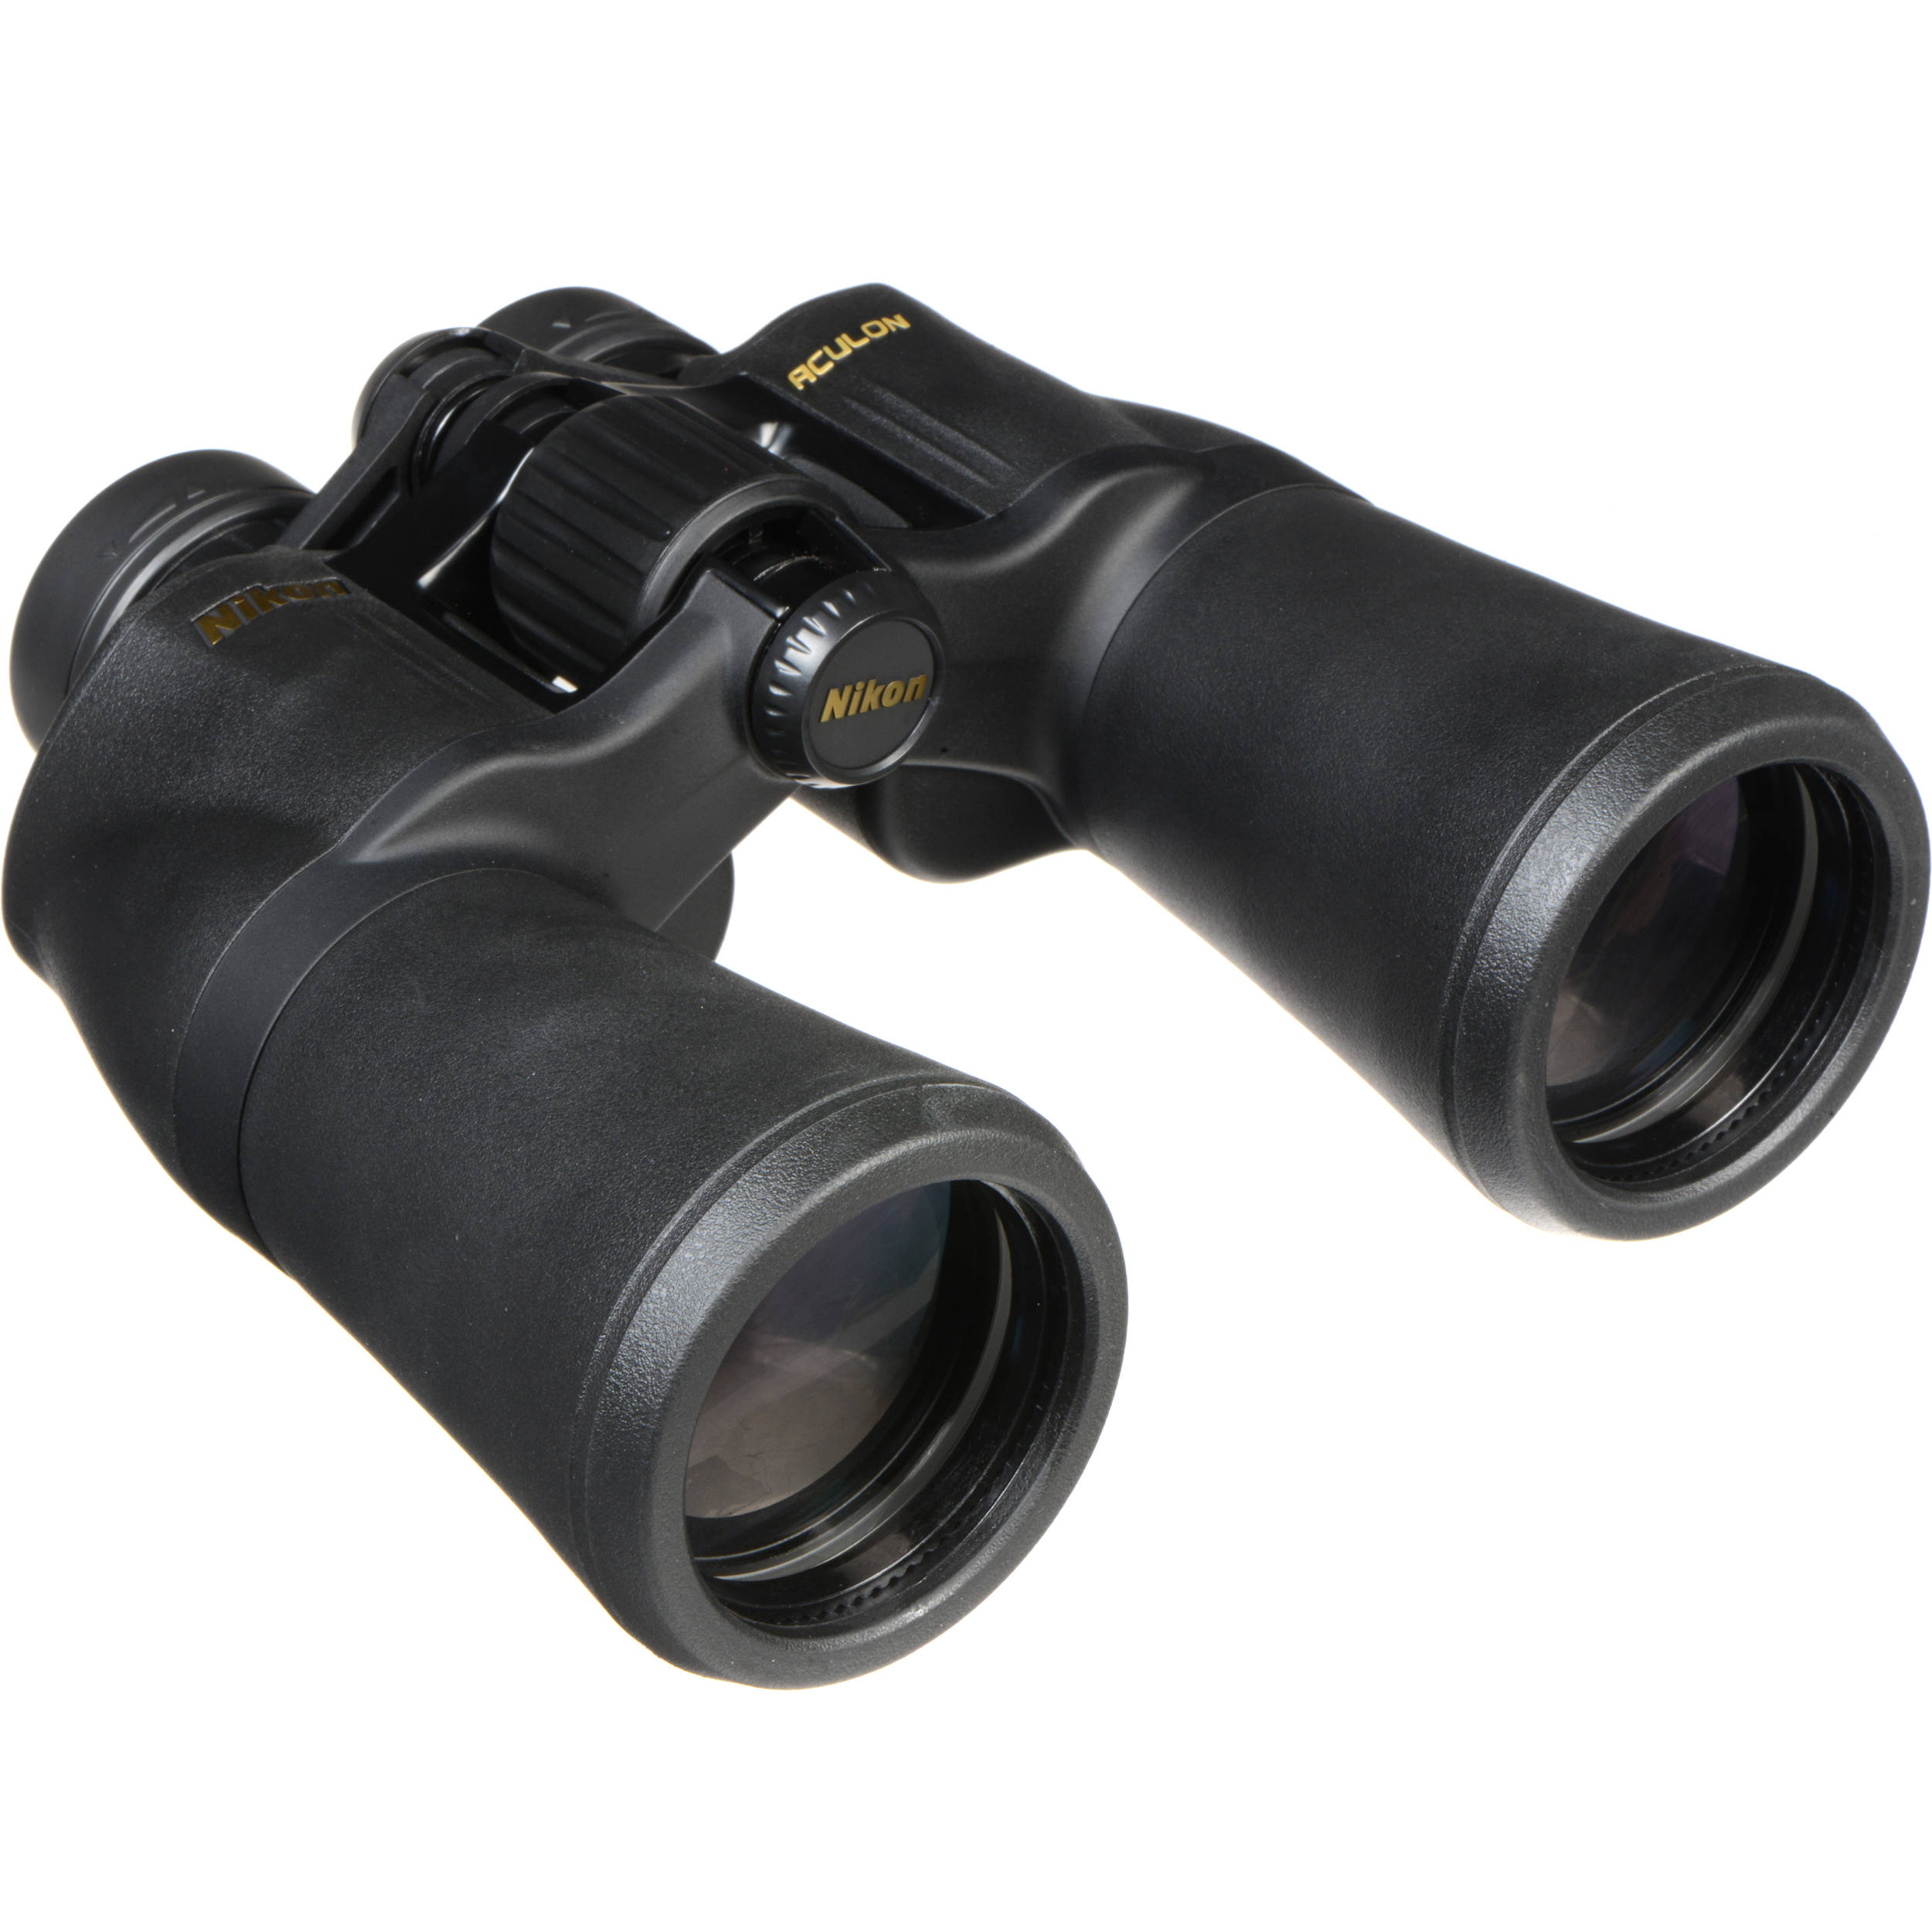 Nikon 16x50 Aculon A211 Binoculars (Black) 8250 B&H Photo Video